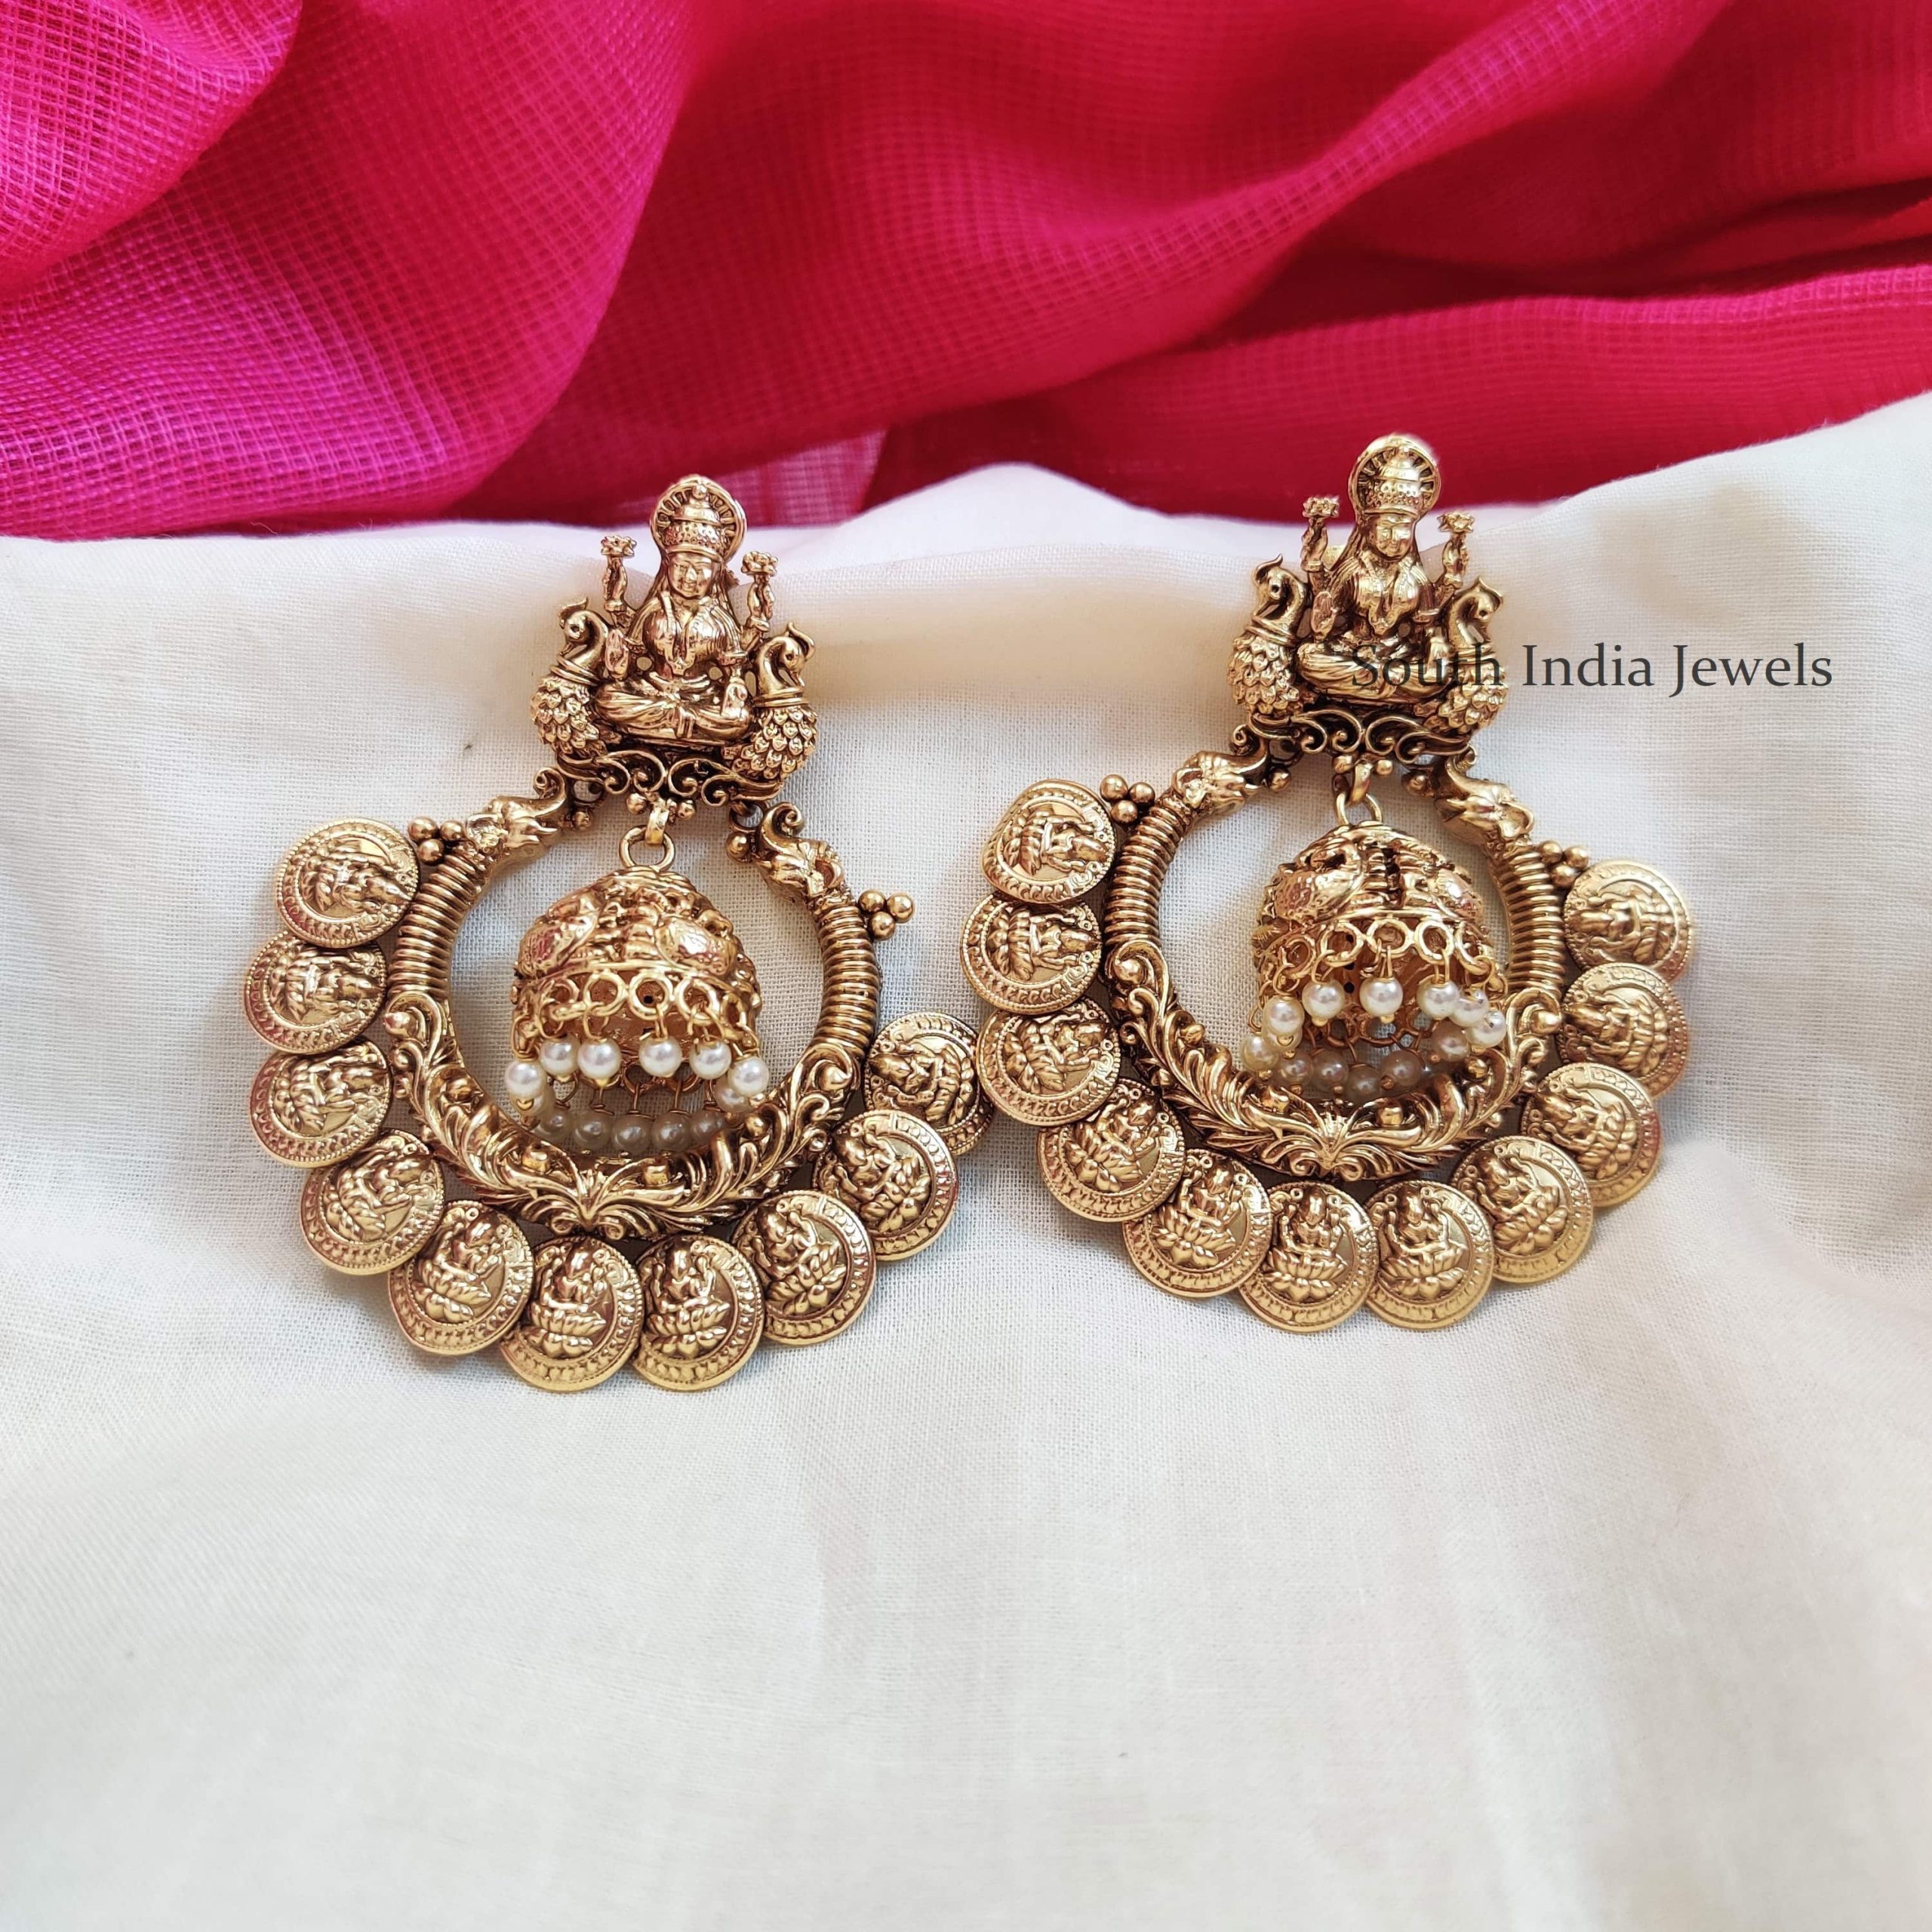 Coin Design Imitation Chandbali Earings With Pearl Beads - 01